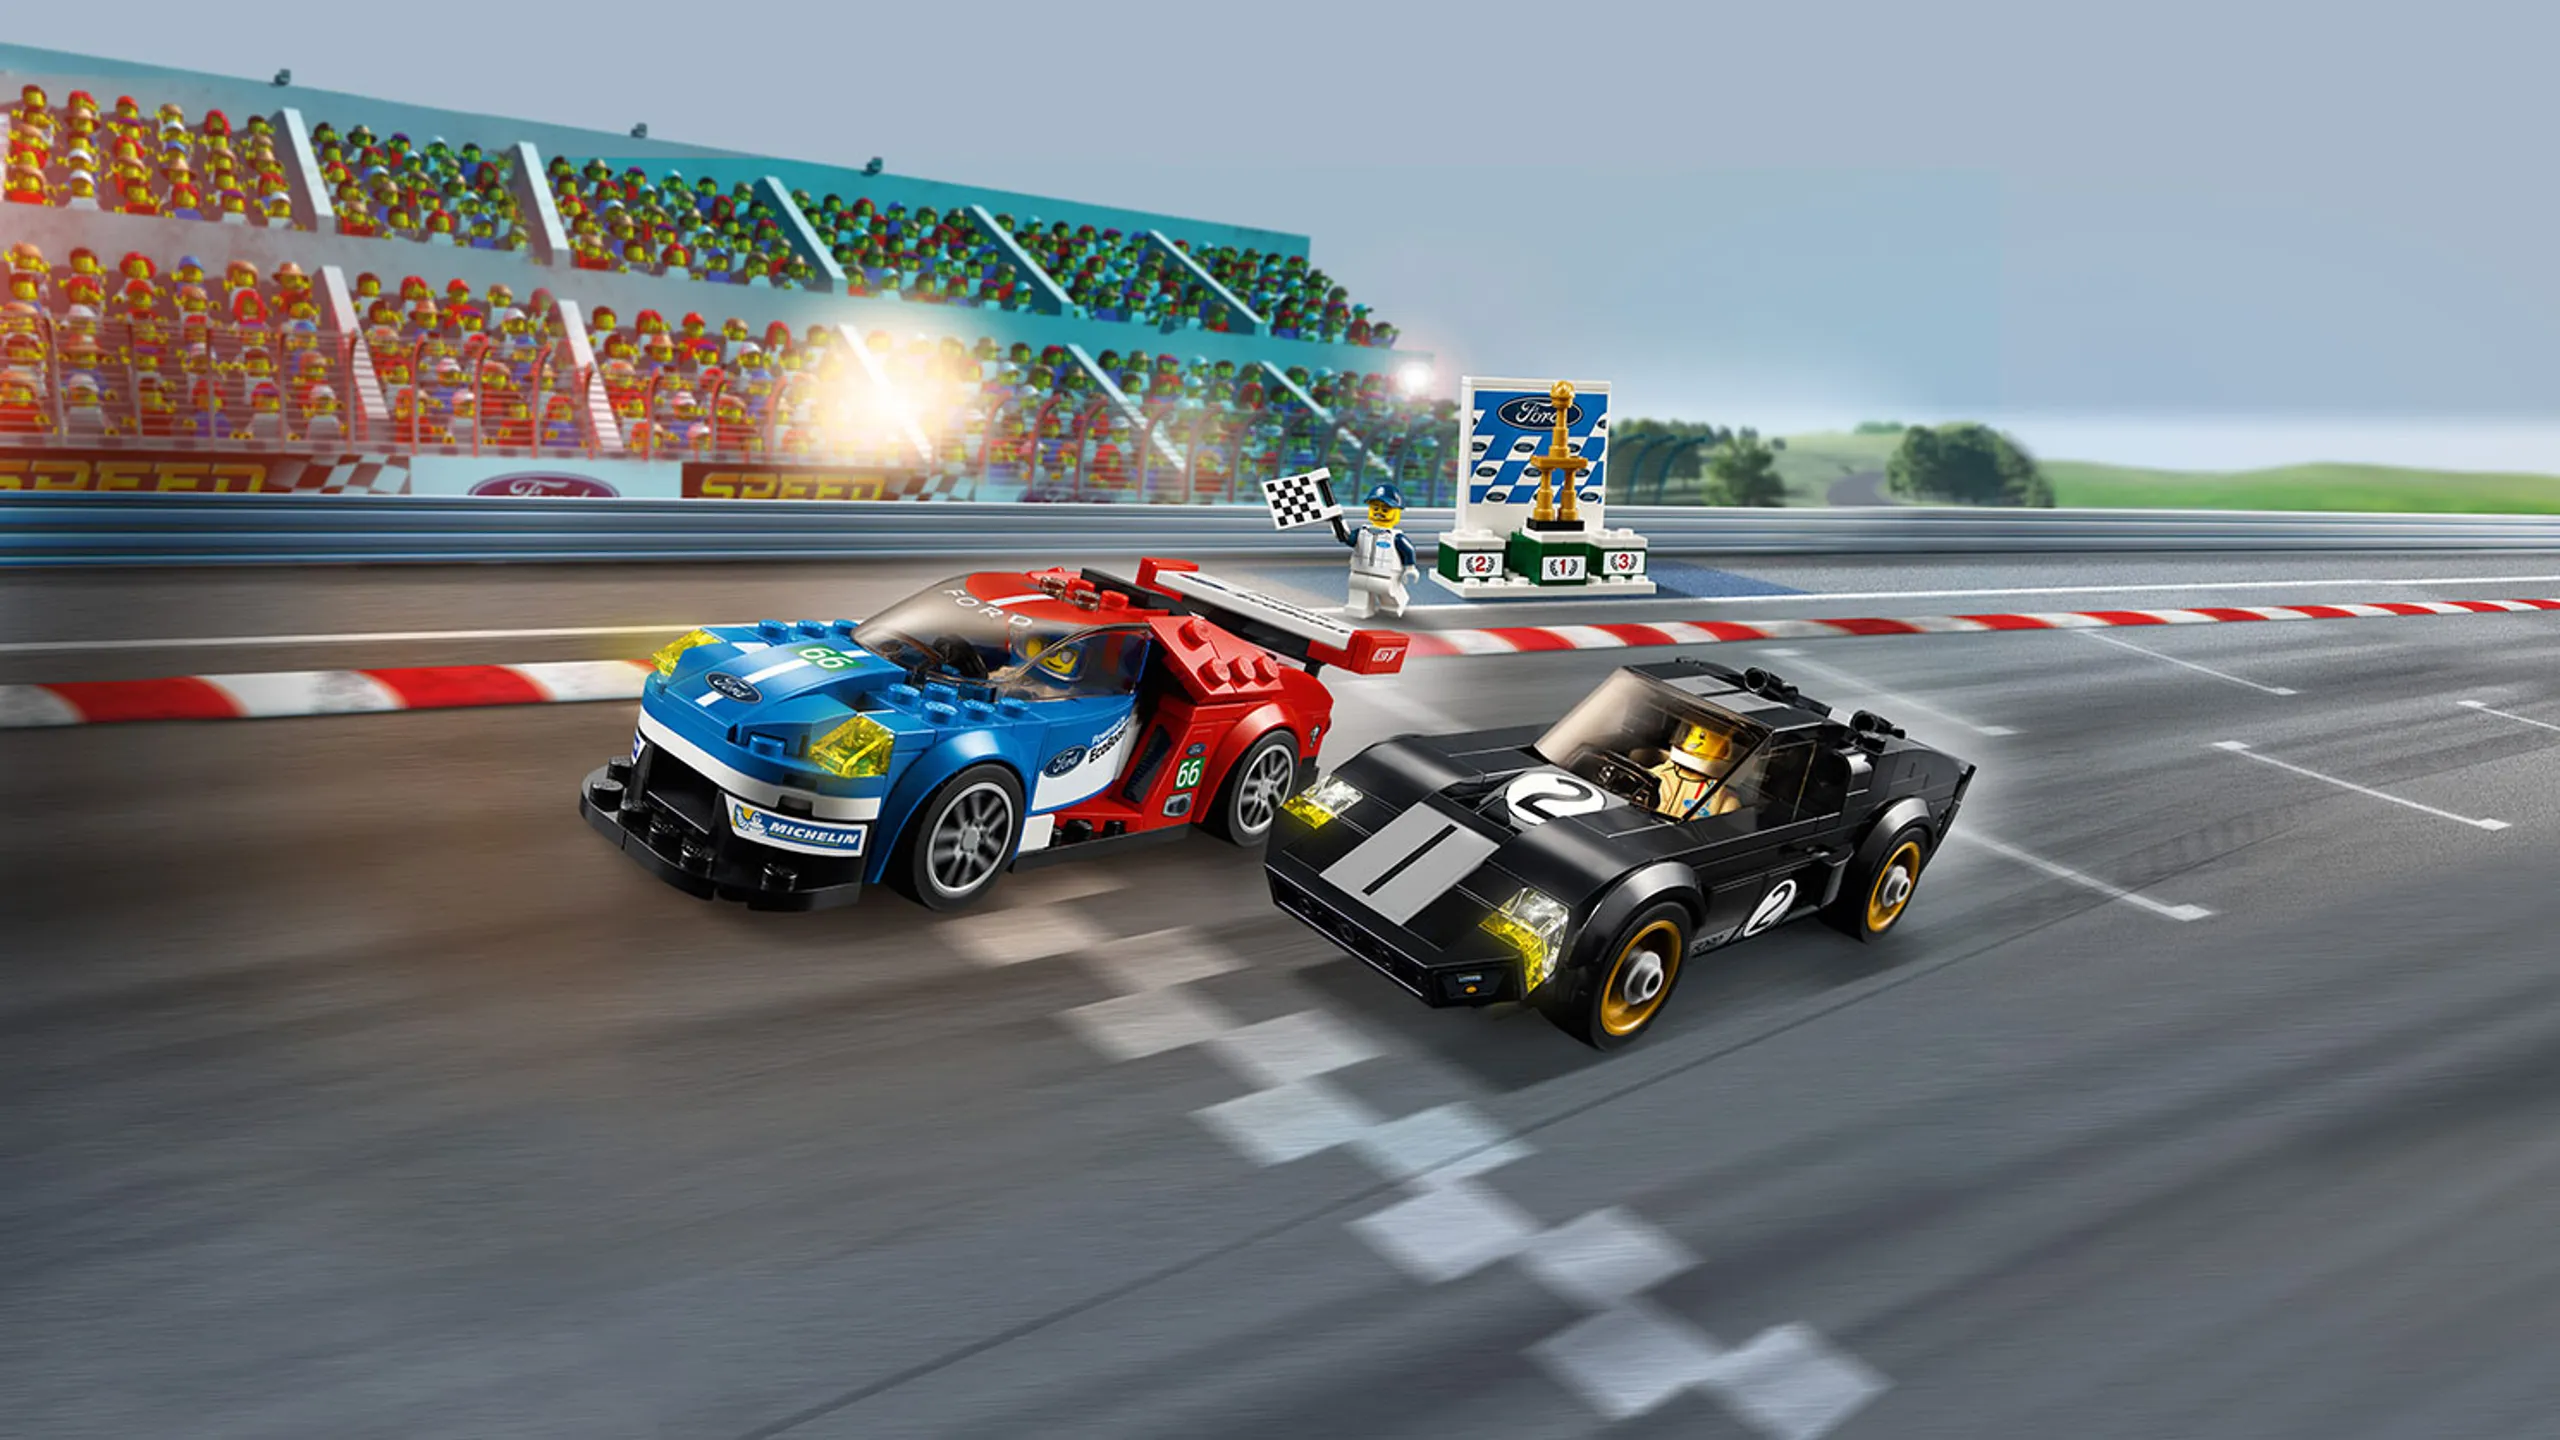 LEGO® Speed Champions Toys